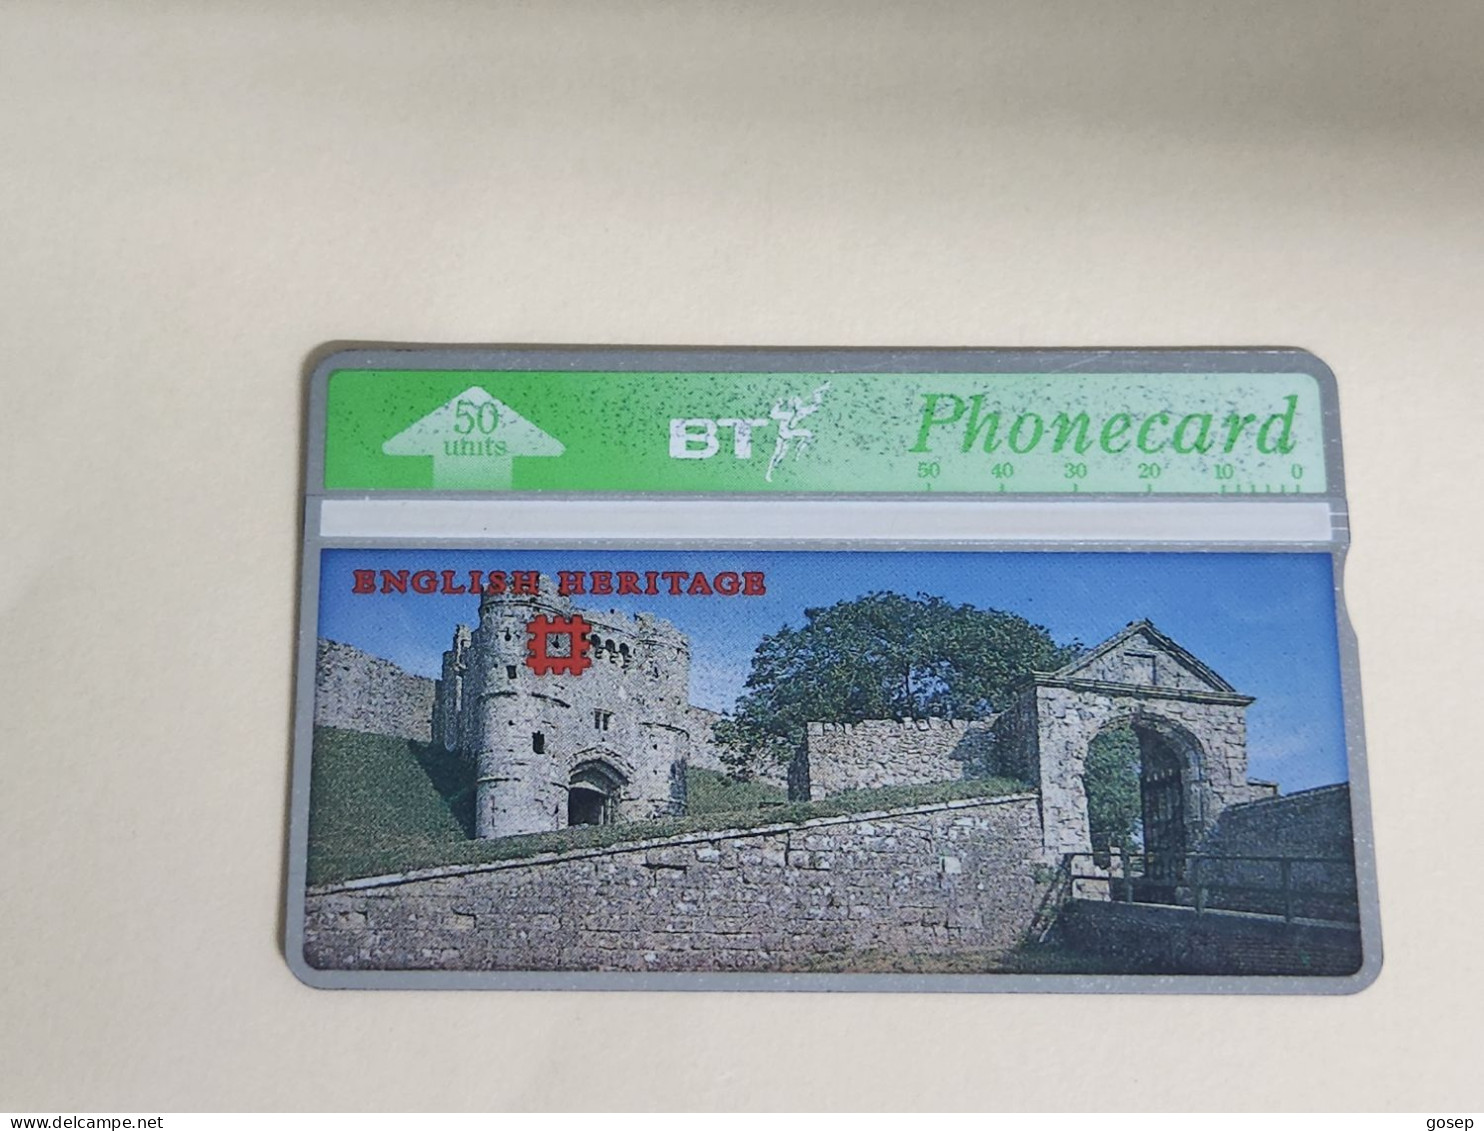 United Kingdom-(BTA105)-HERITAGE-carisbrooke Castle-(171)(50units)(508E91539)price Cataloge8.00£-mint+1card Prepiad Free - BT Emissions Publicitaires